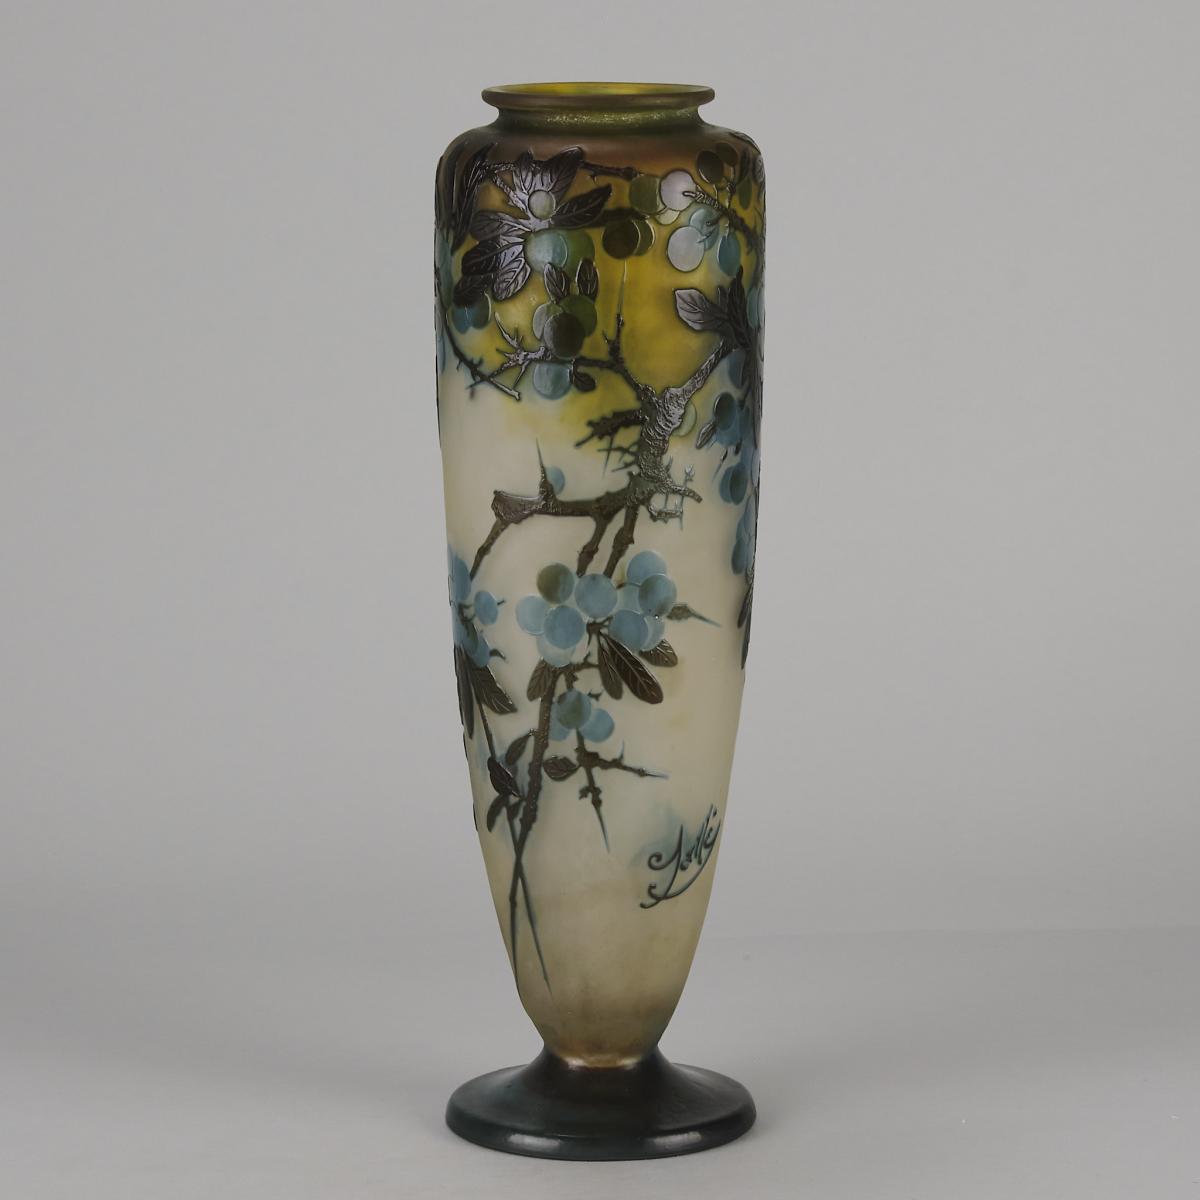 Early 20th Century Art Nouveau Vase entitled "Fruiting Sloe Berries" by Emile Gallé